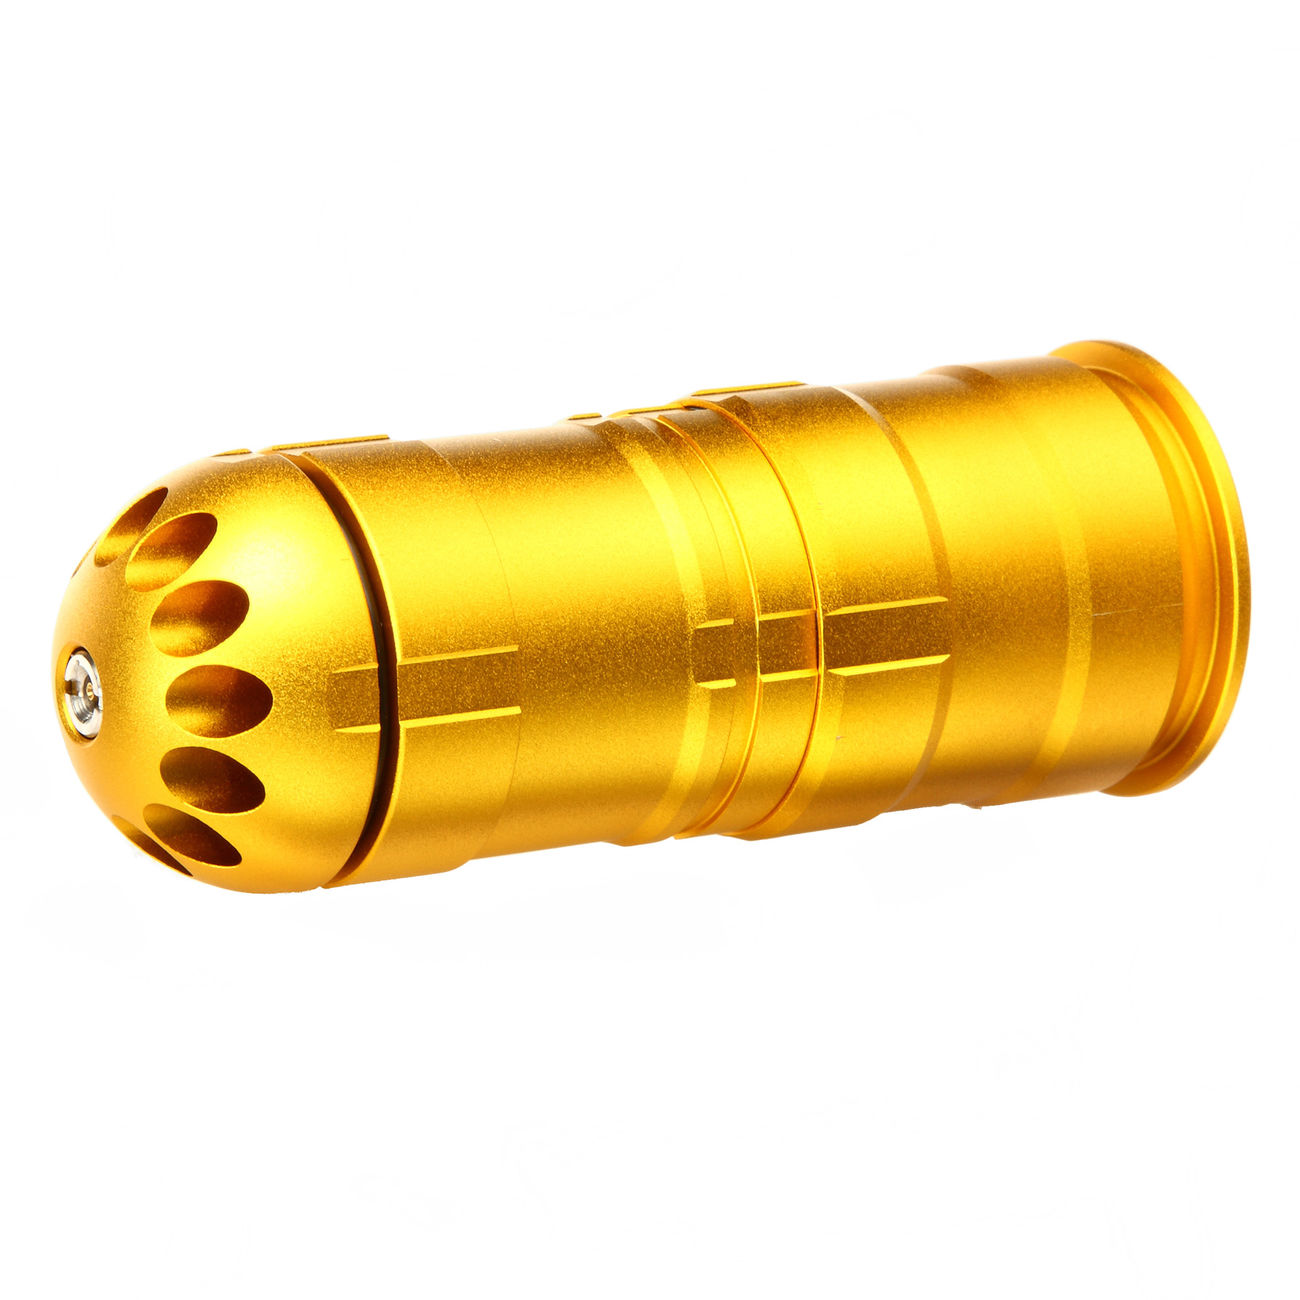 MadBull M922A1 40mm Vollmetall Hülse / Einlegepatrone f. 120 6mm BBs gold